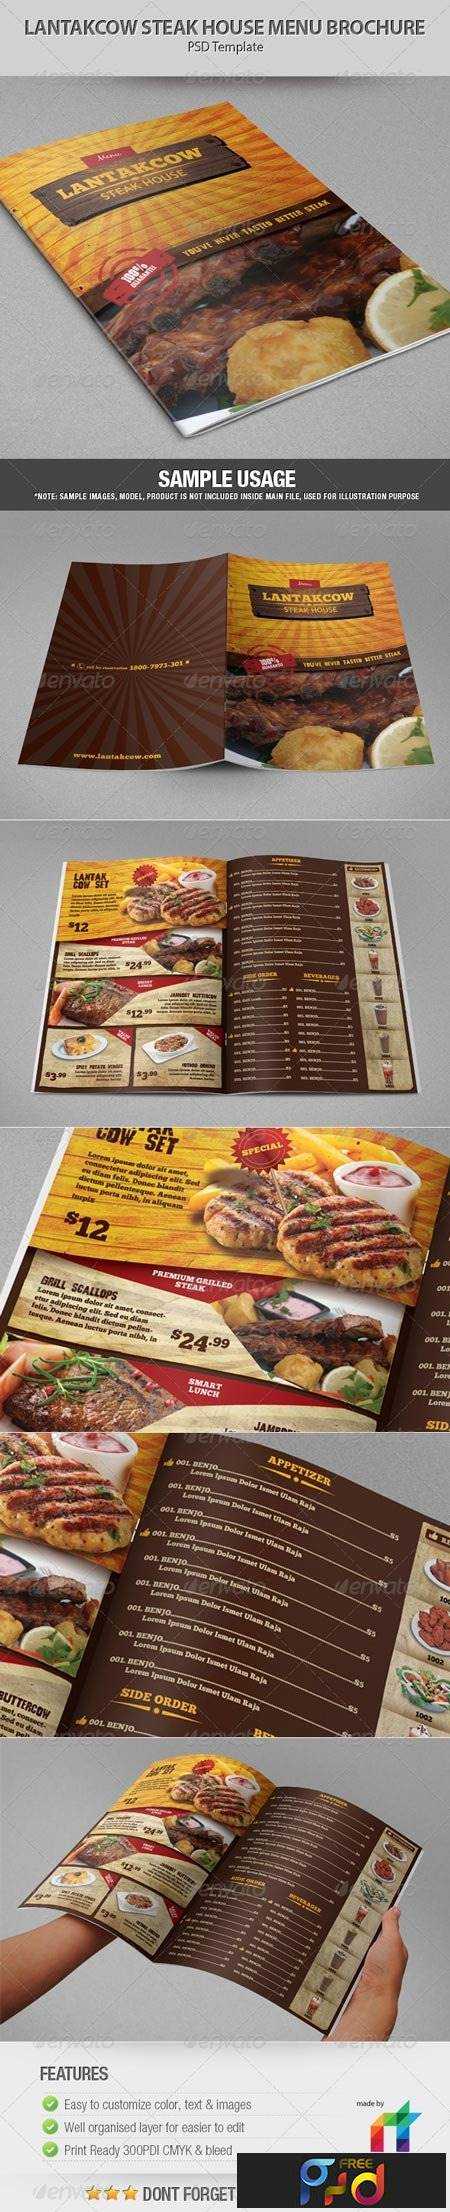 freepsdvn-com_1407284718_lantakcow-steak-house-menu-brochure-3386596